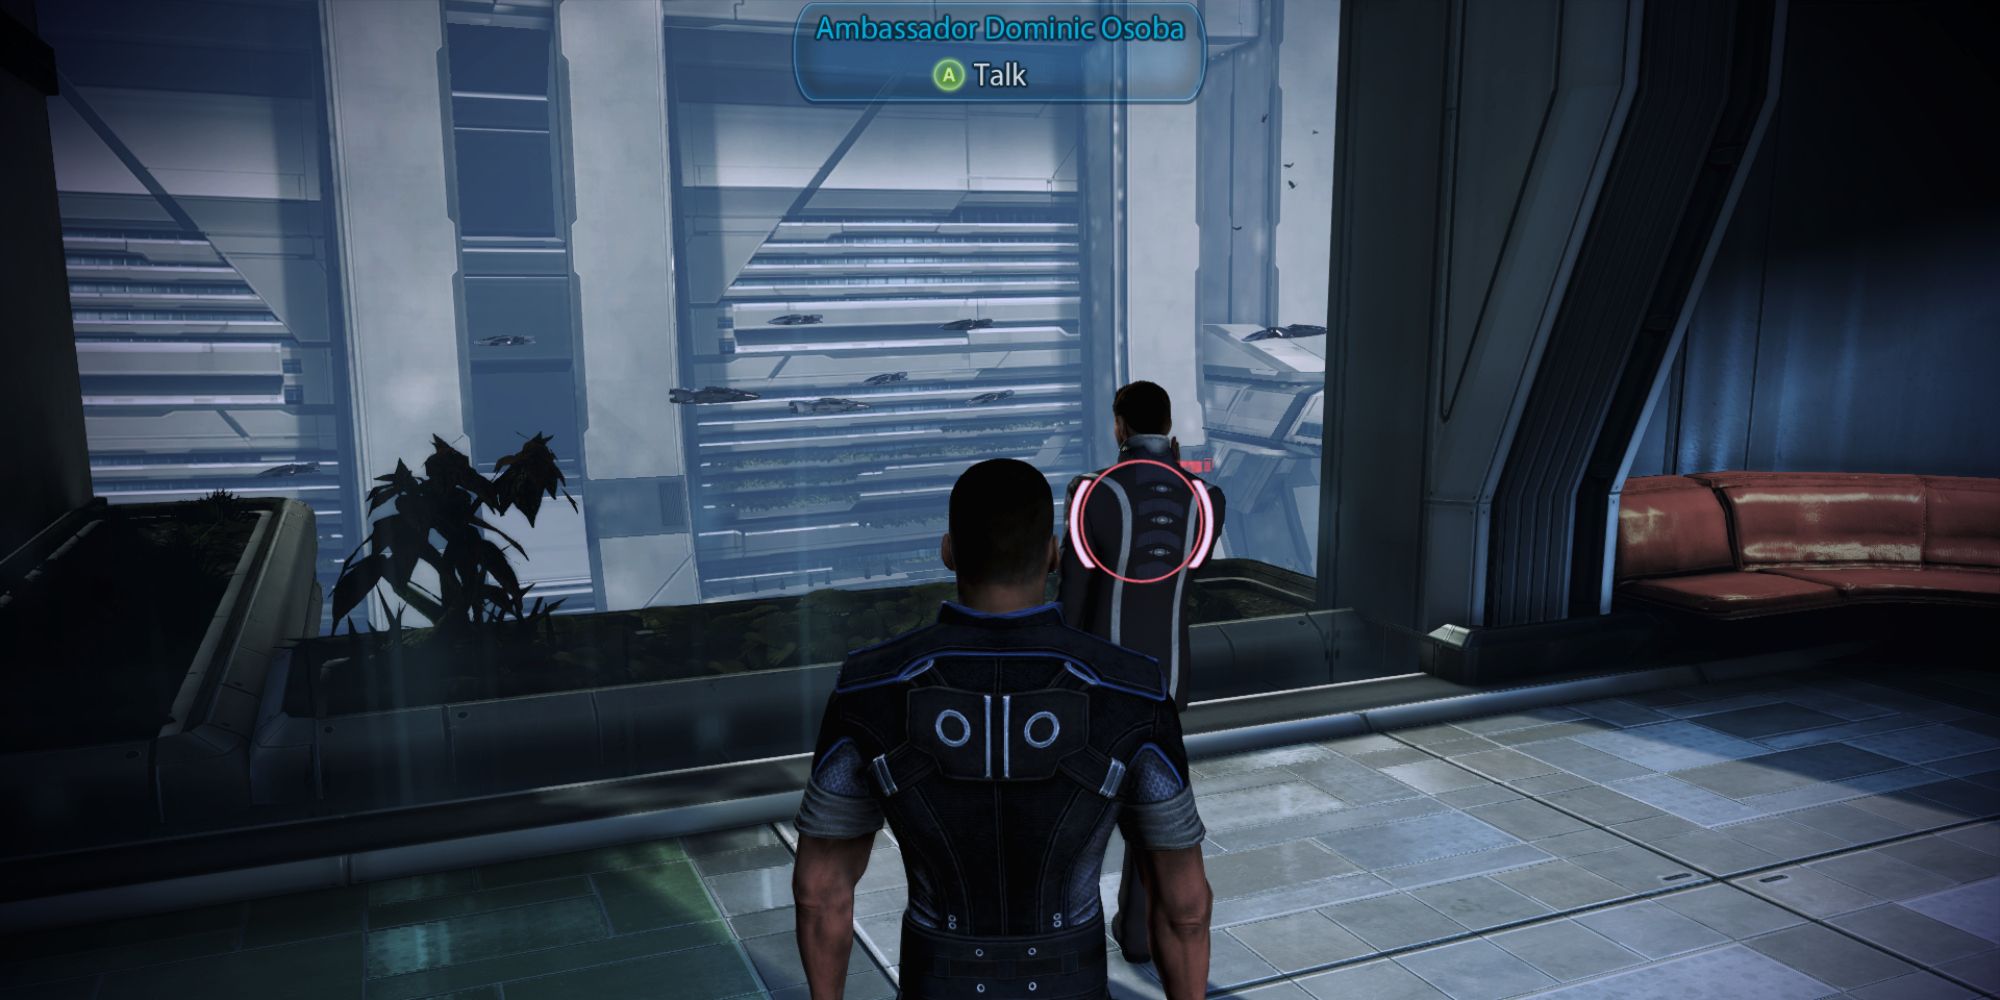 Mass Effect 3 Screenshot Of Ambassador Osoba In Embassies